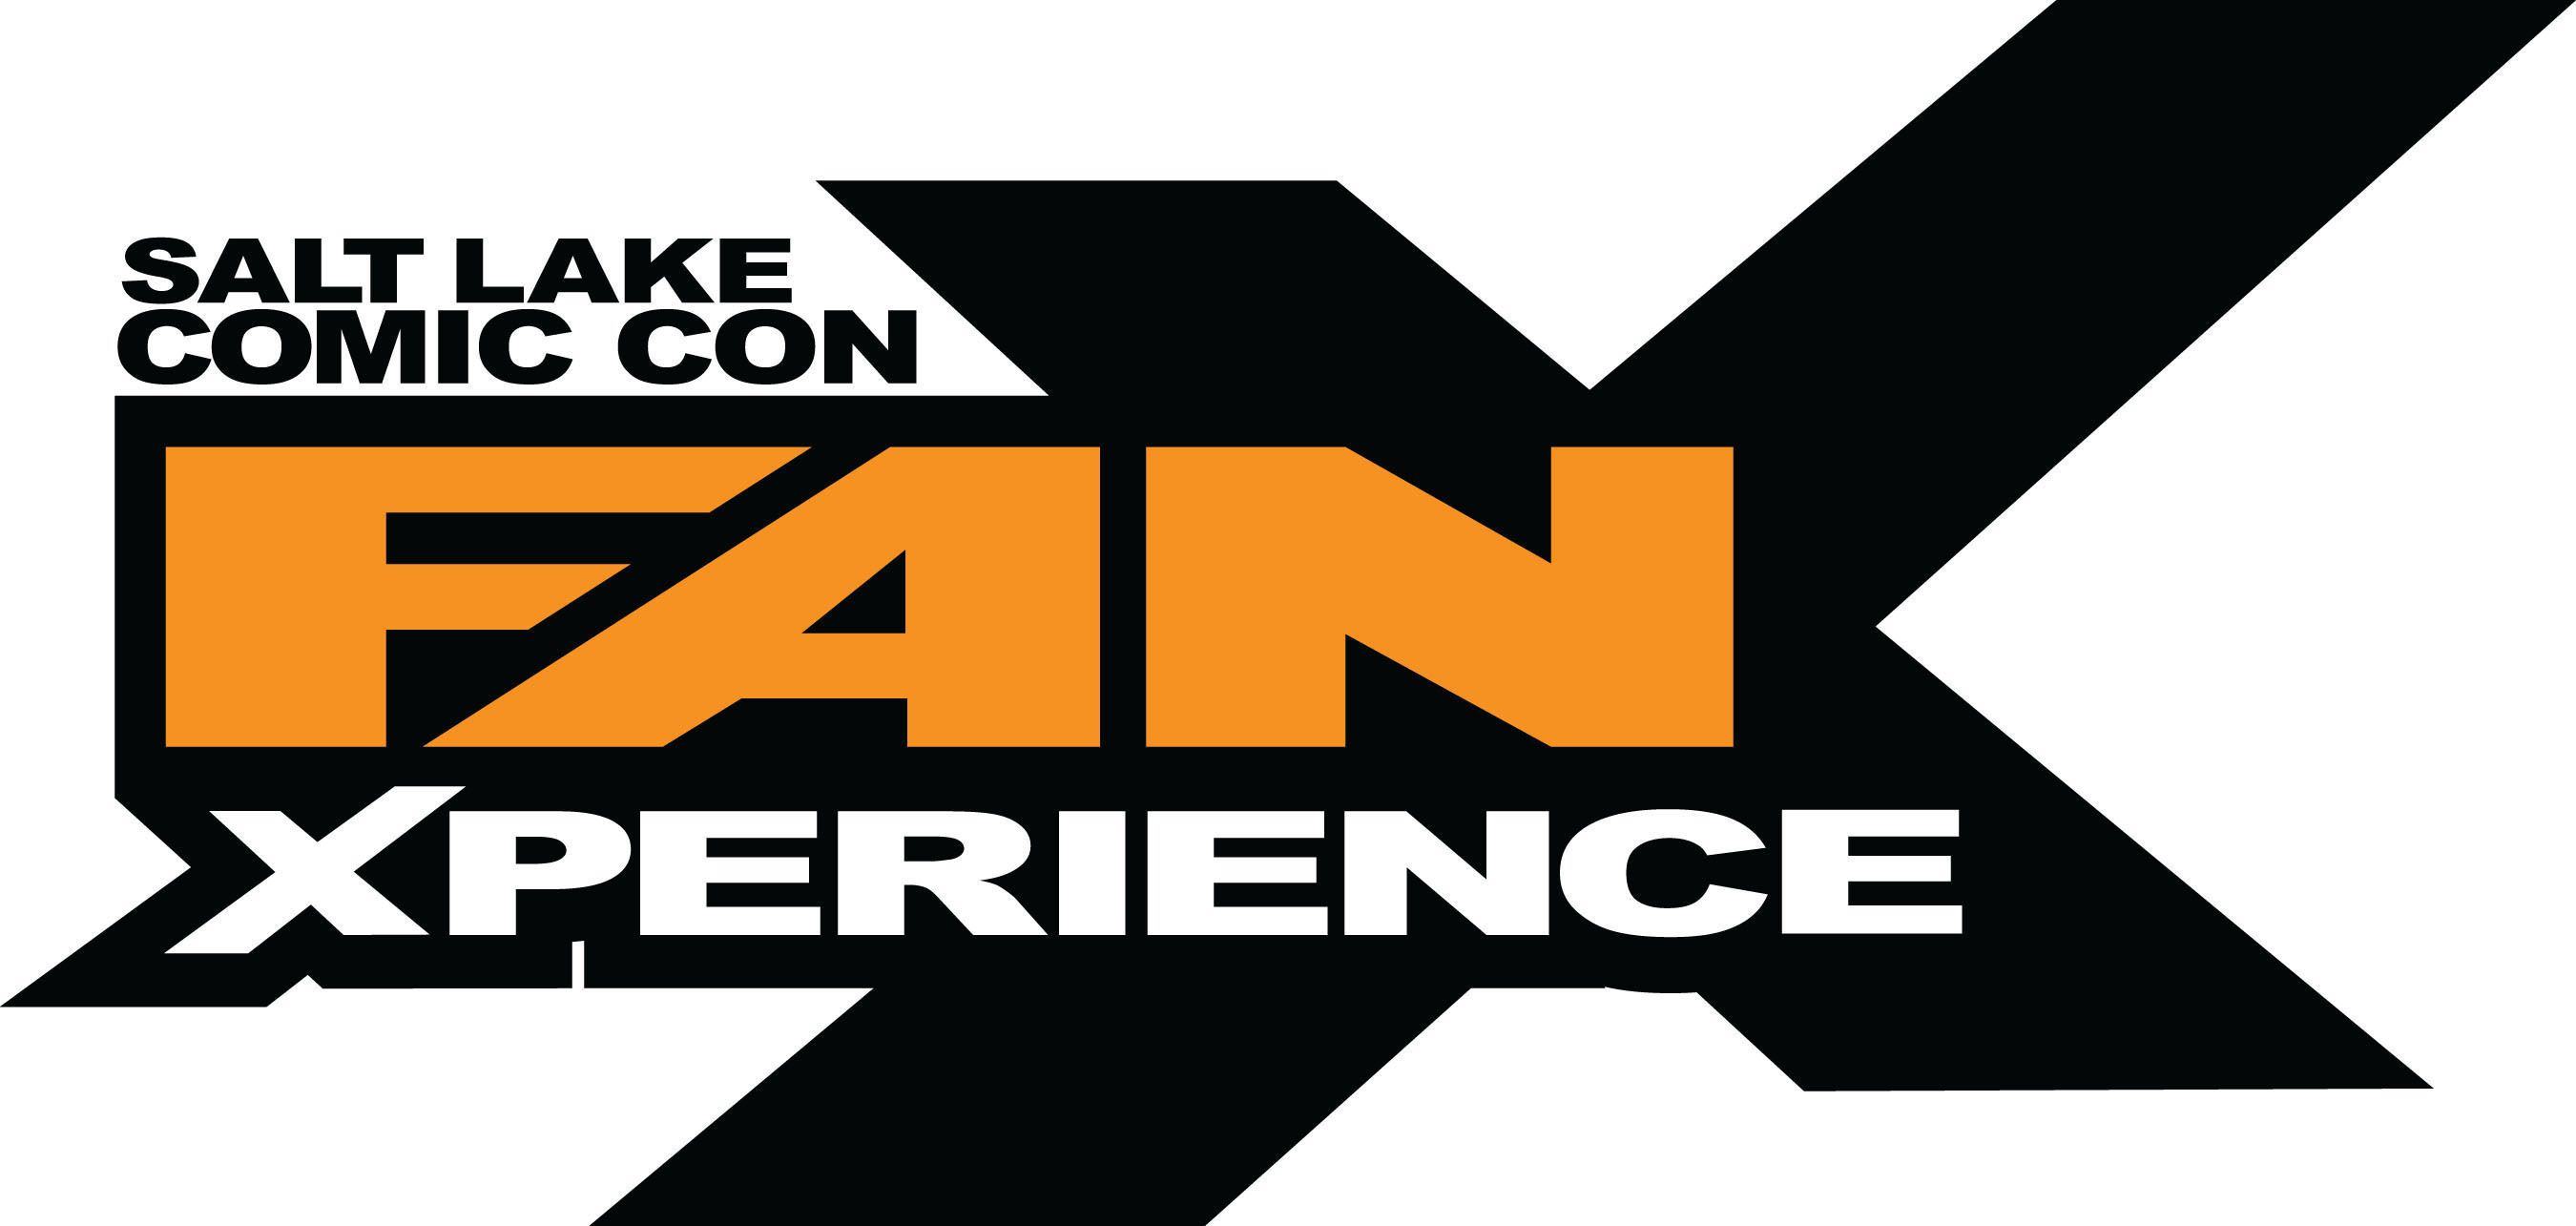 The Salt Lake Comic Con FanX will take place April 17-19, 2014 at the Salt Palace Convention Center in downtown Salt Lake City, Utah. (PRNewsFoto/Salt Lake Comic Con) (PRNewsFoto/SALT LAKE COMIC CON)